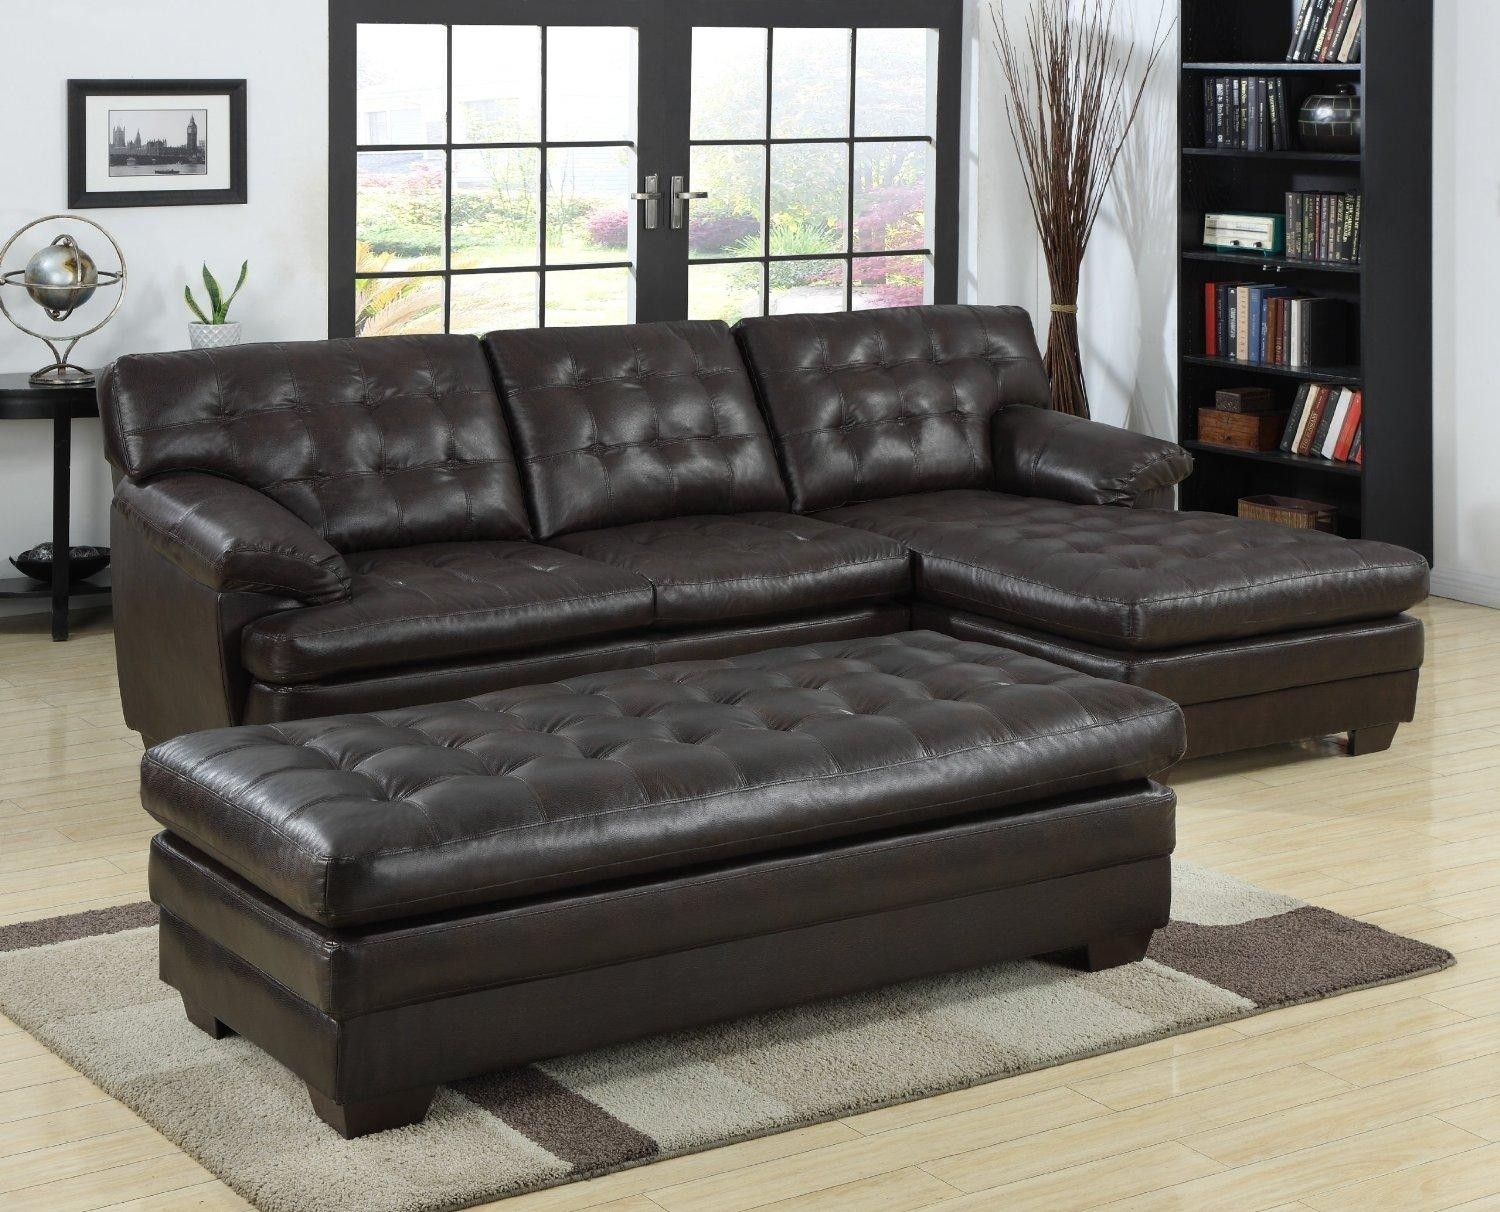 20 top black leather chaise sofas sofa ideas